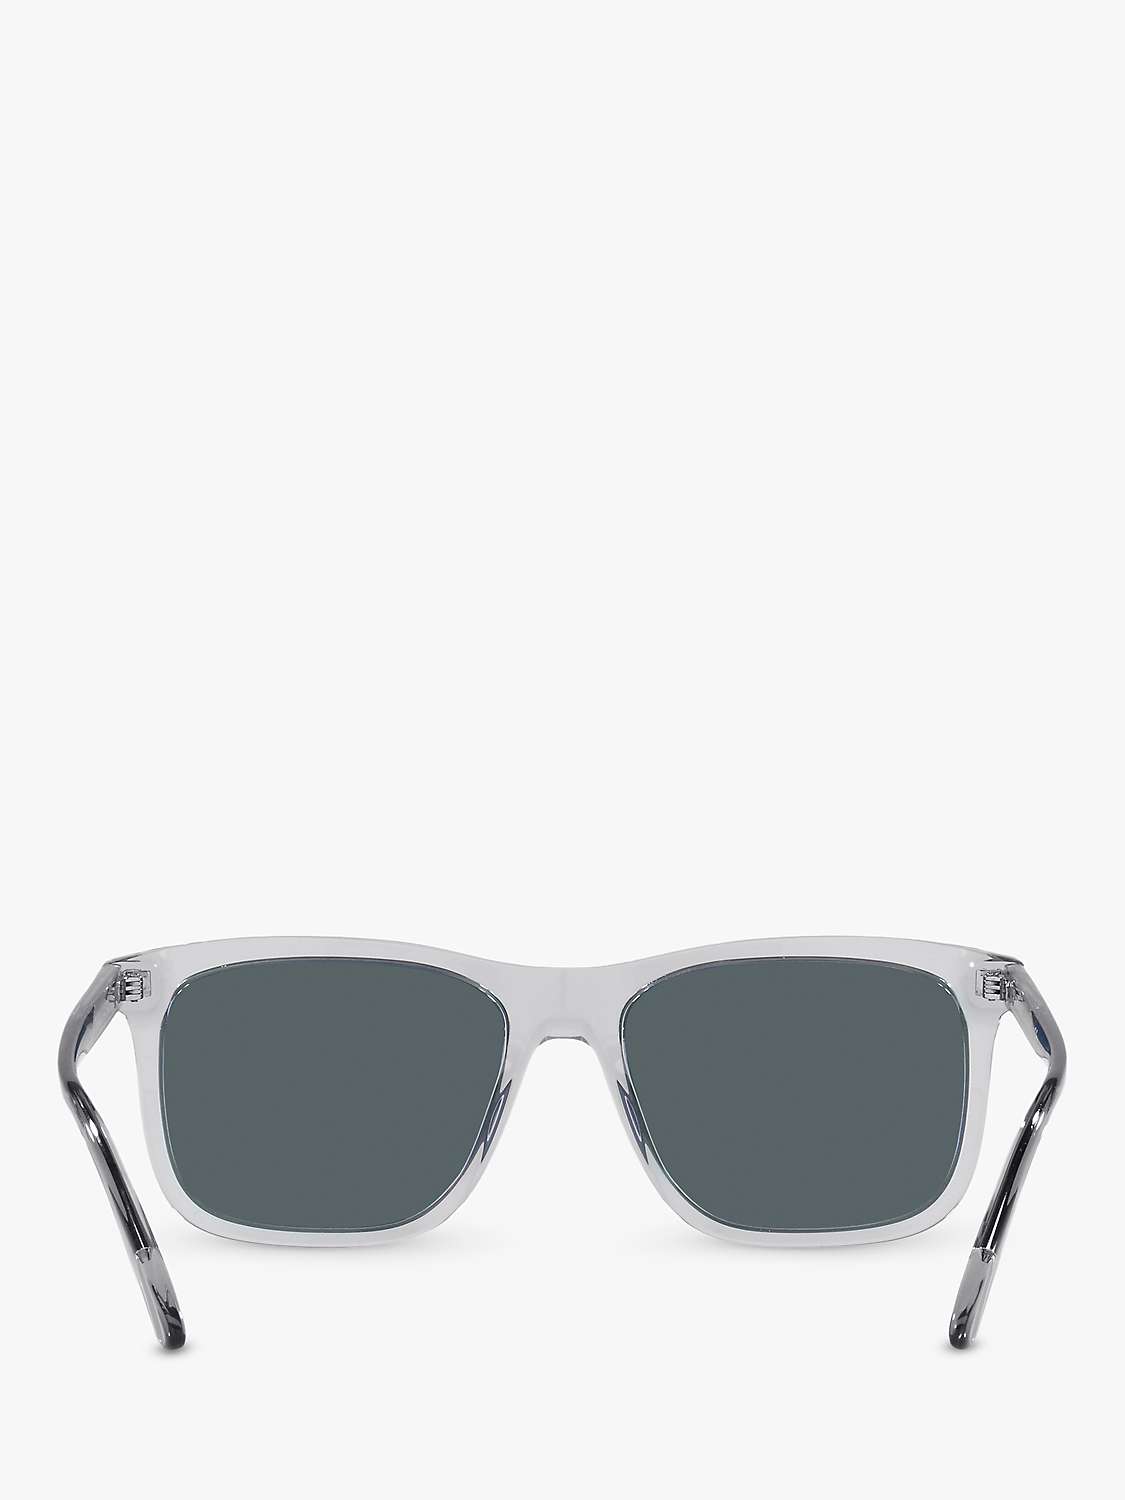 Buy Prada PR 18WS Men's Rectangular Sunglasses, Clear Grey/Grey Online at johnlewis.com